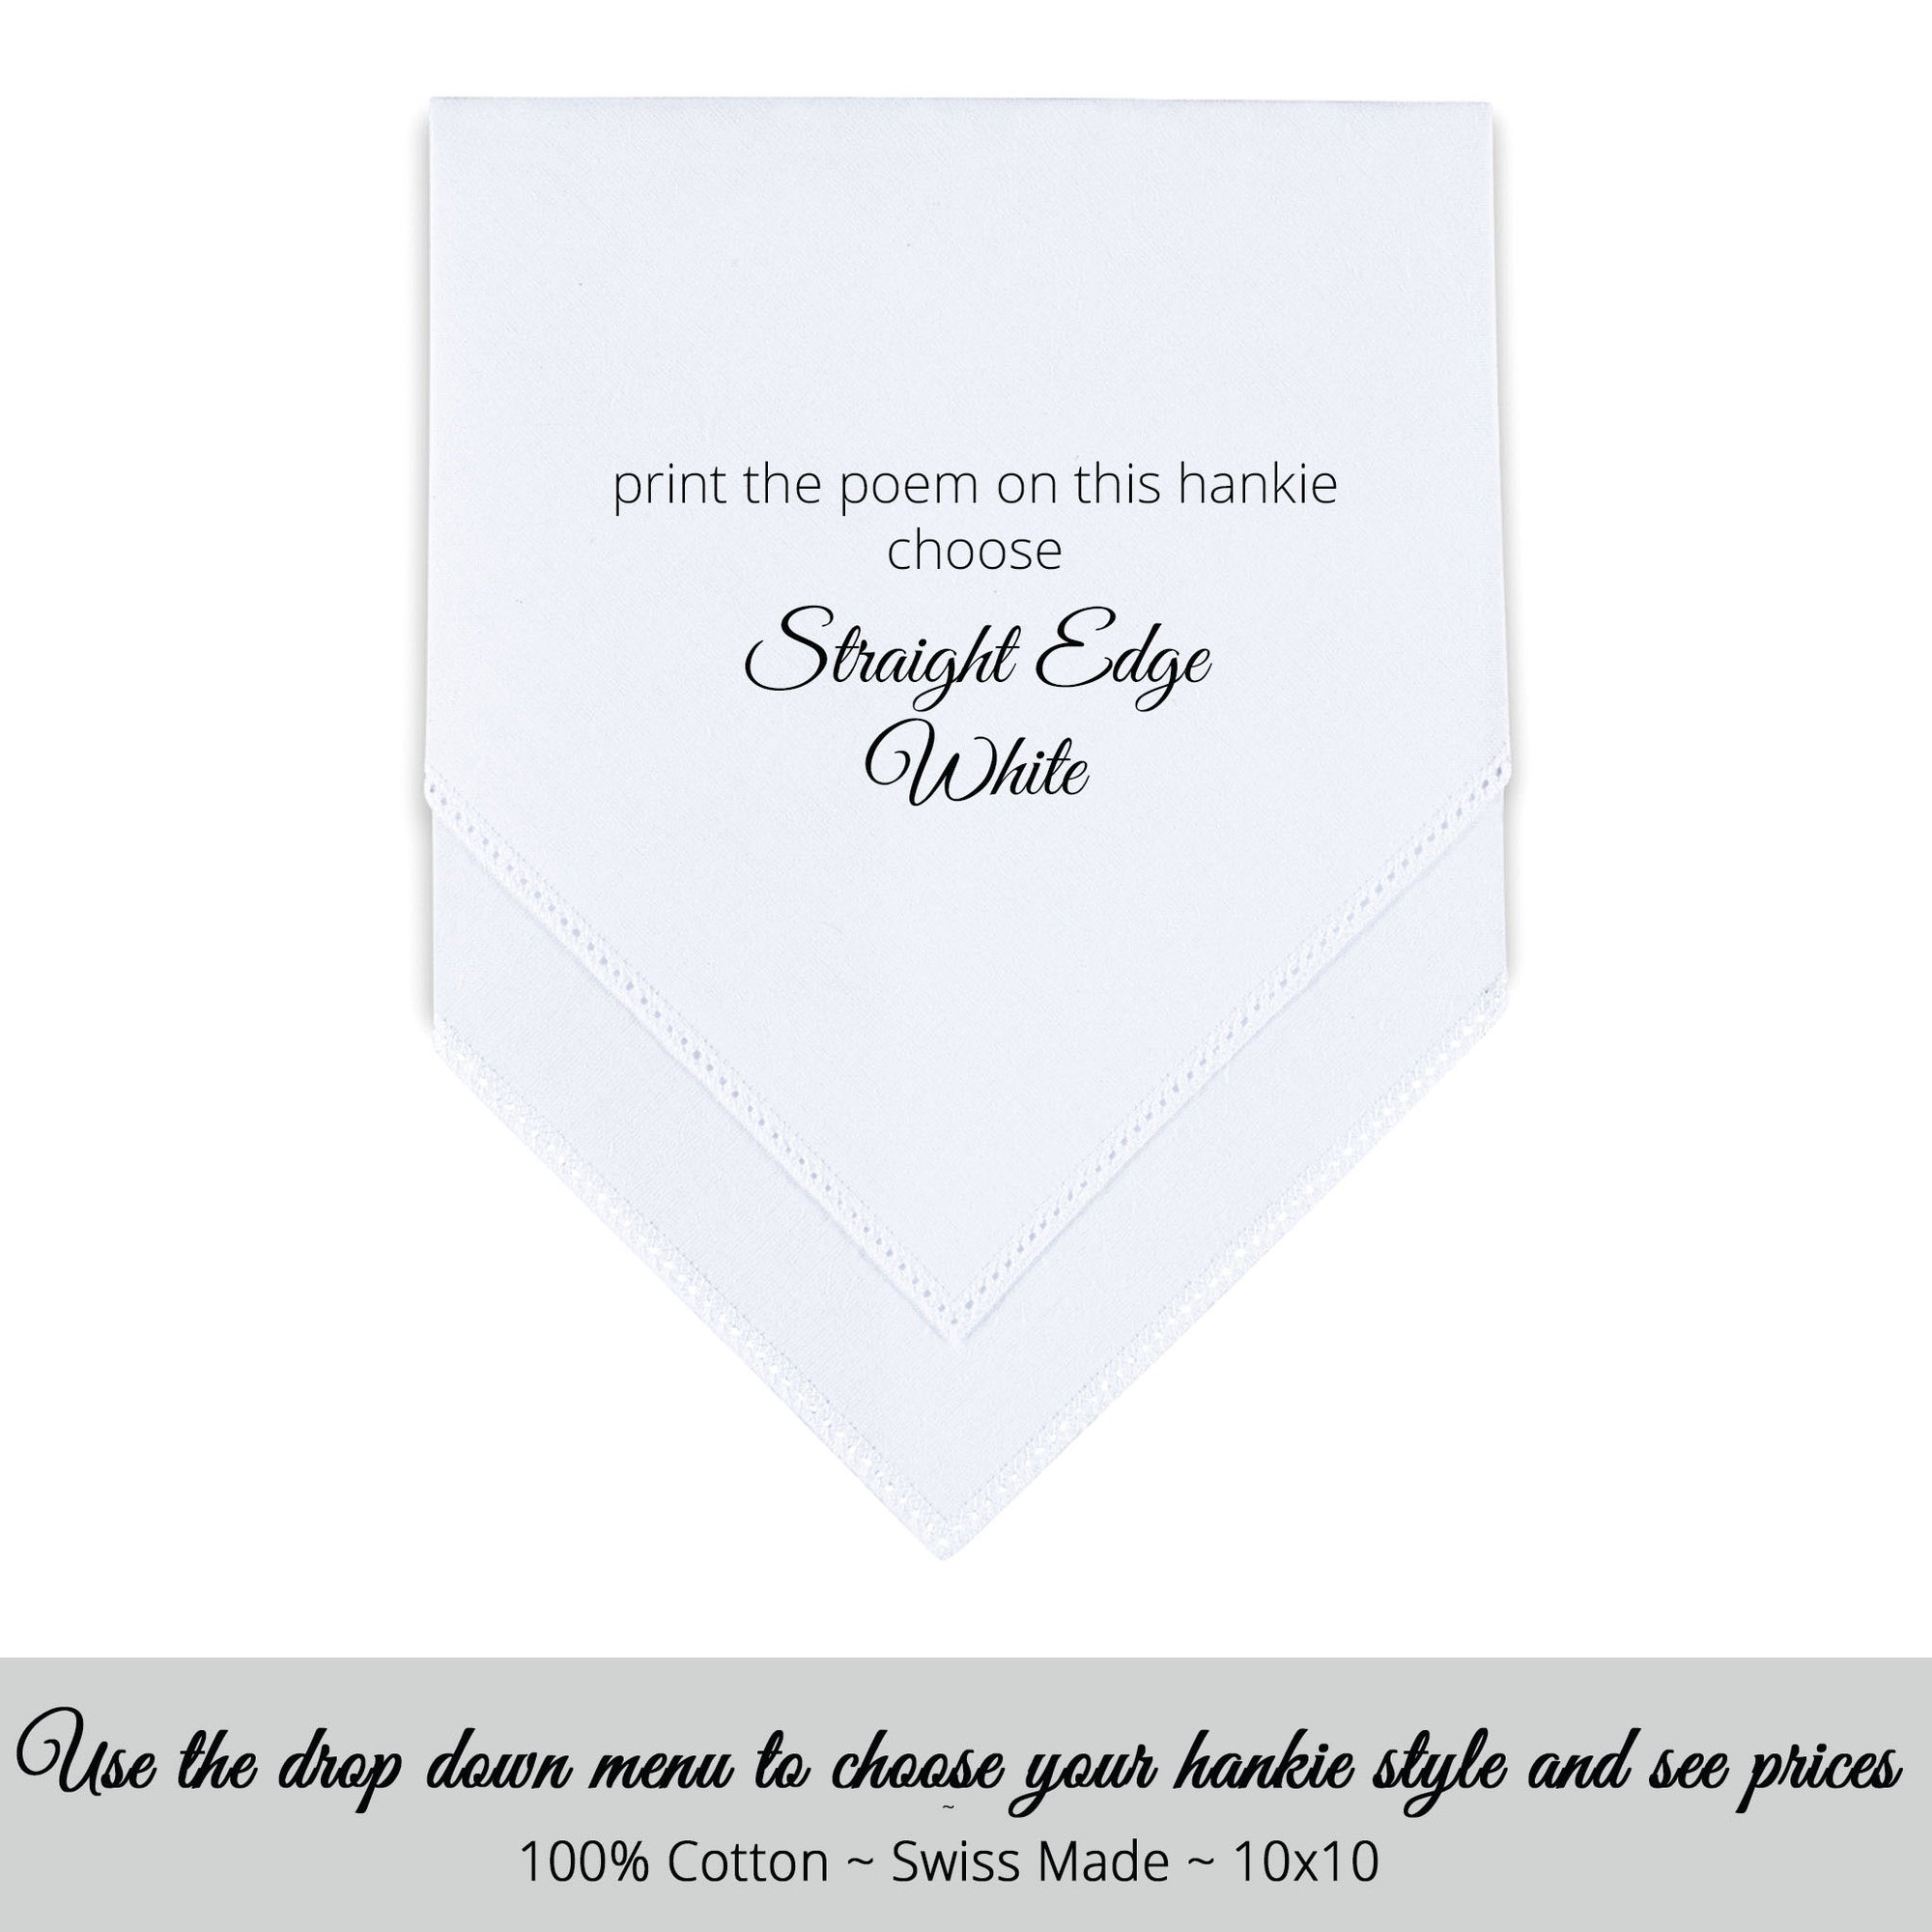 Straight edge white personalized wedding handkerchief for the flower girl